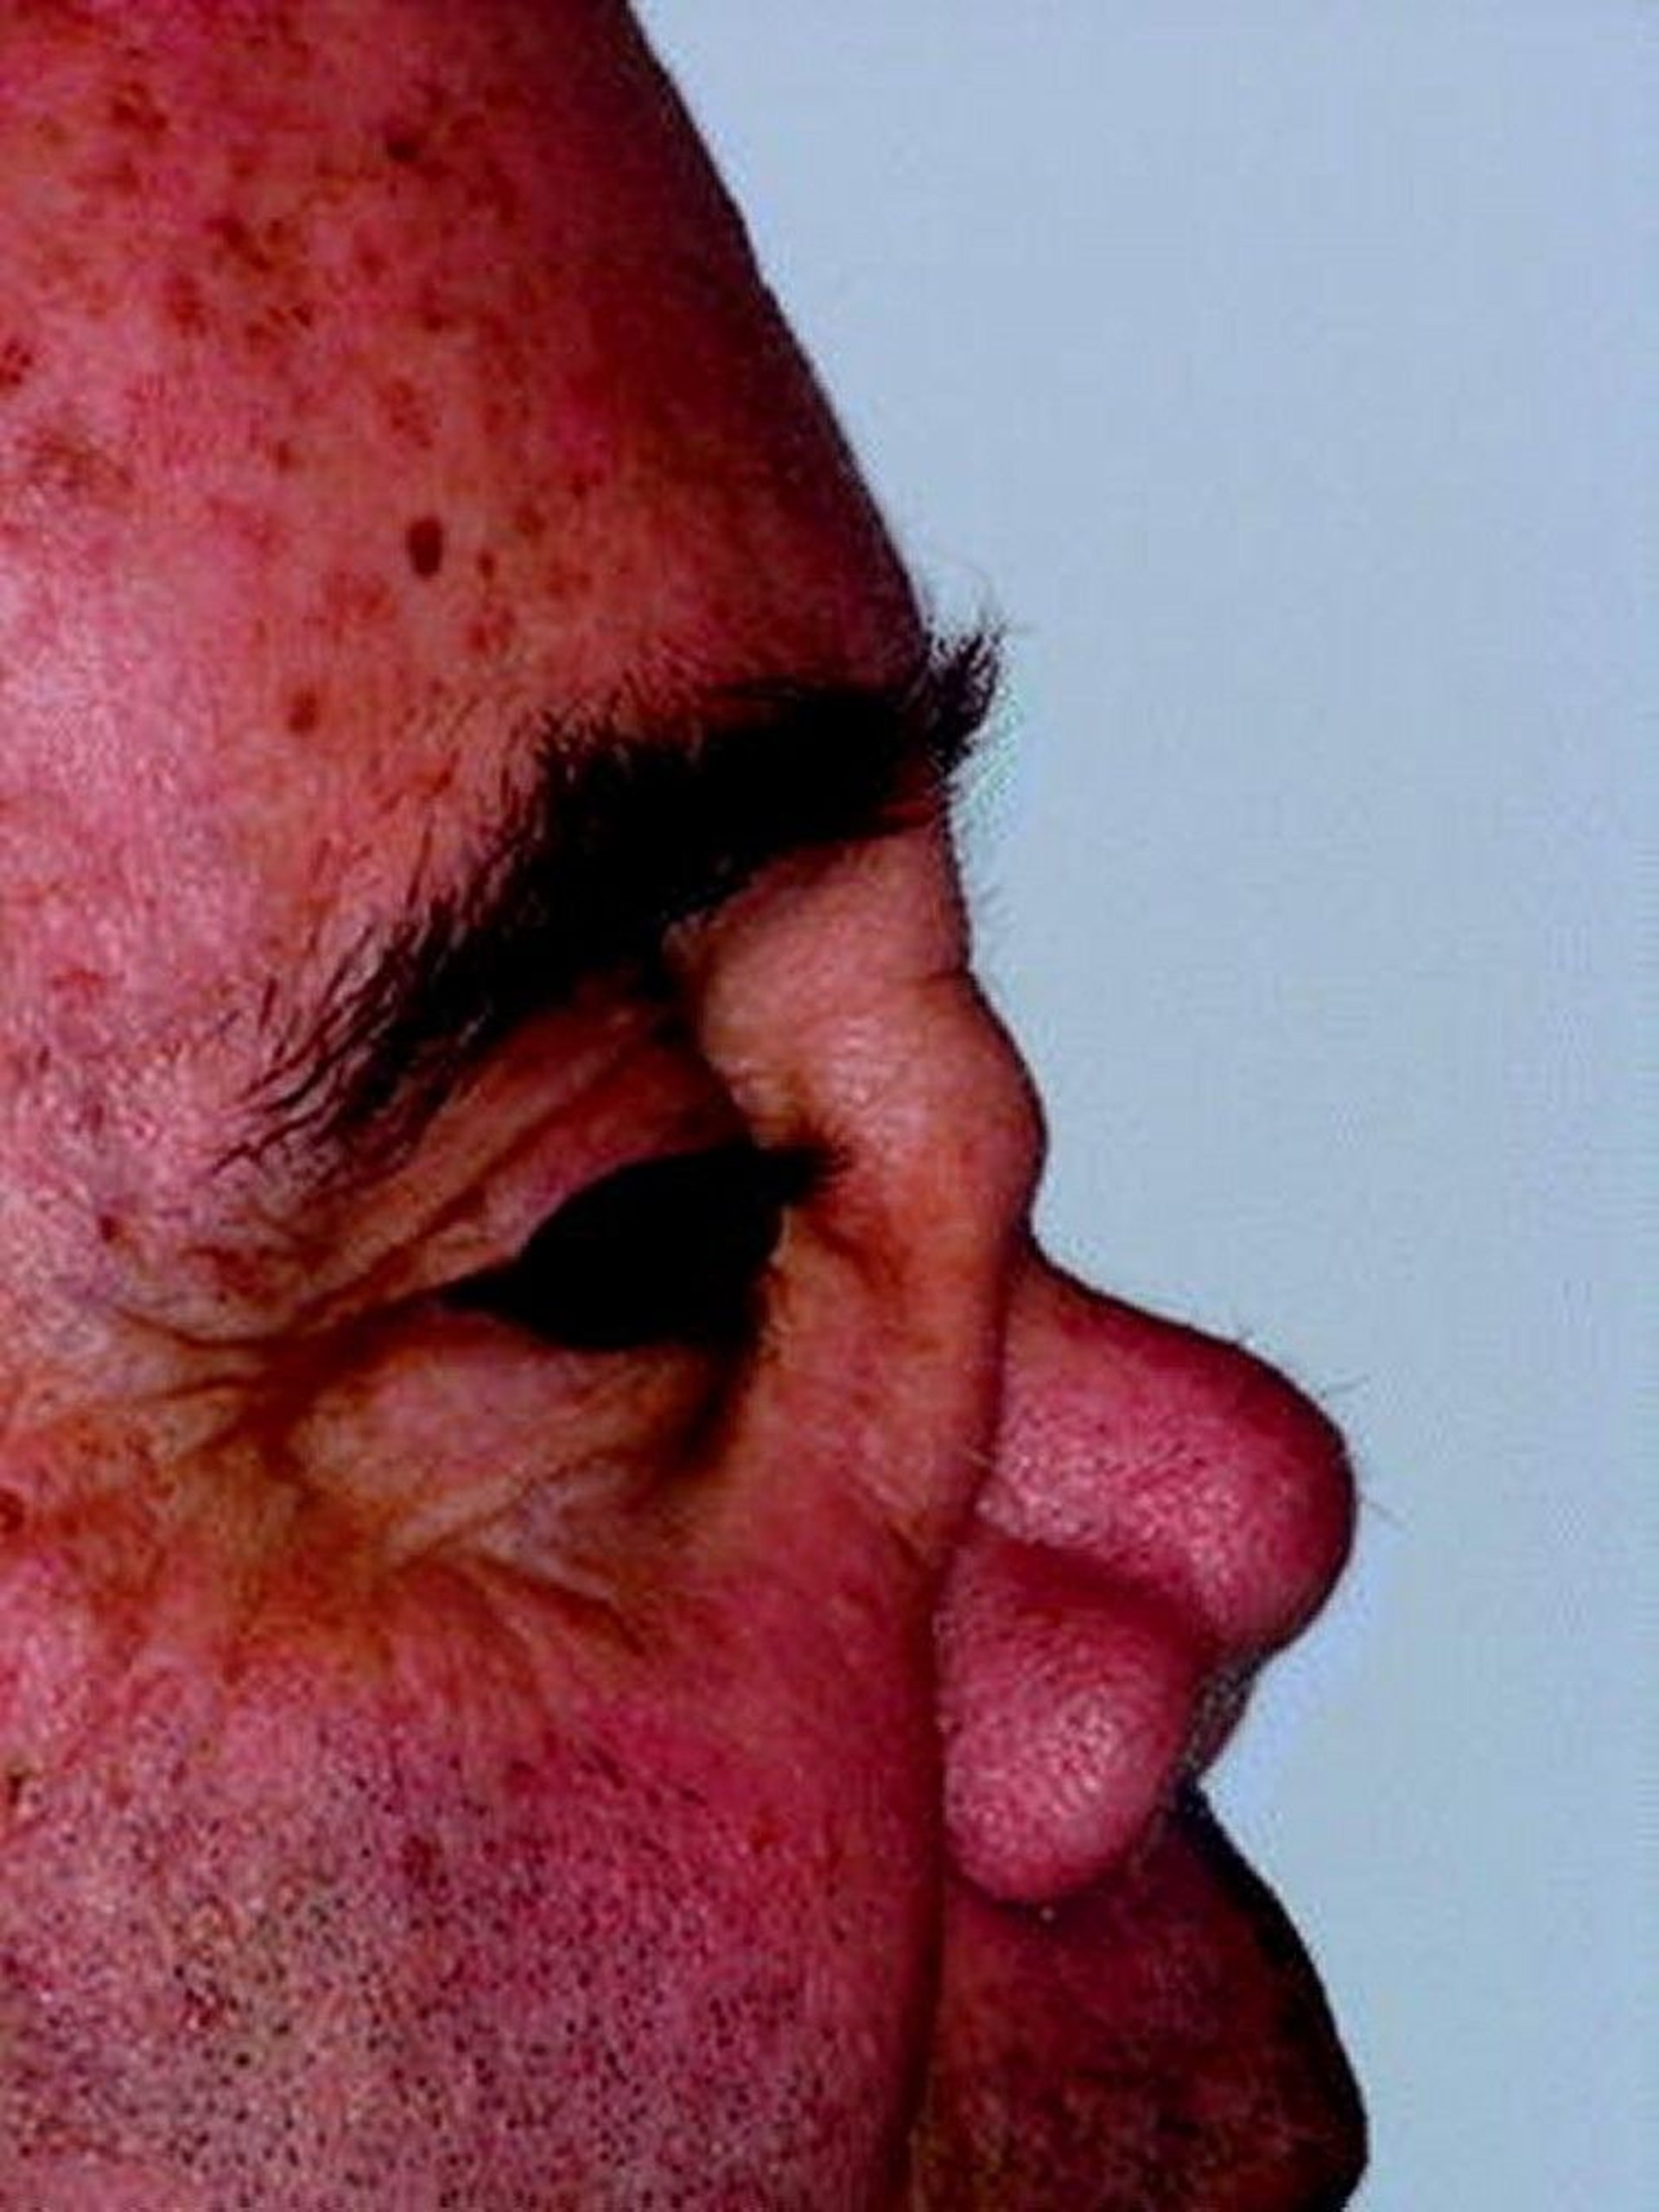 Saddle Nose Deformity in Granulomatosis with Polyangiitis (GPA)